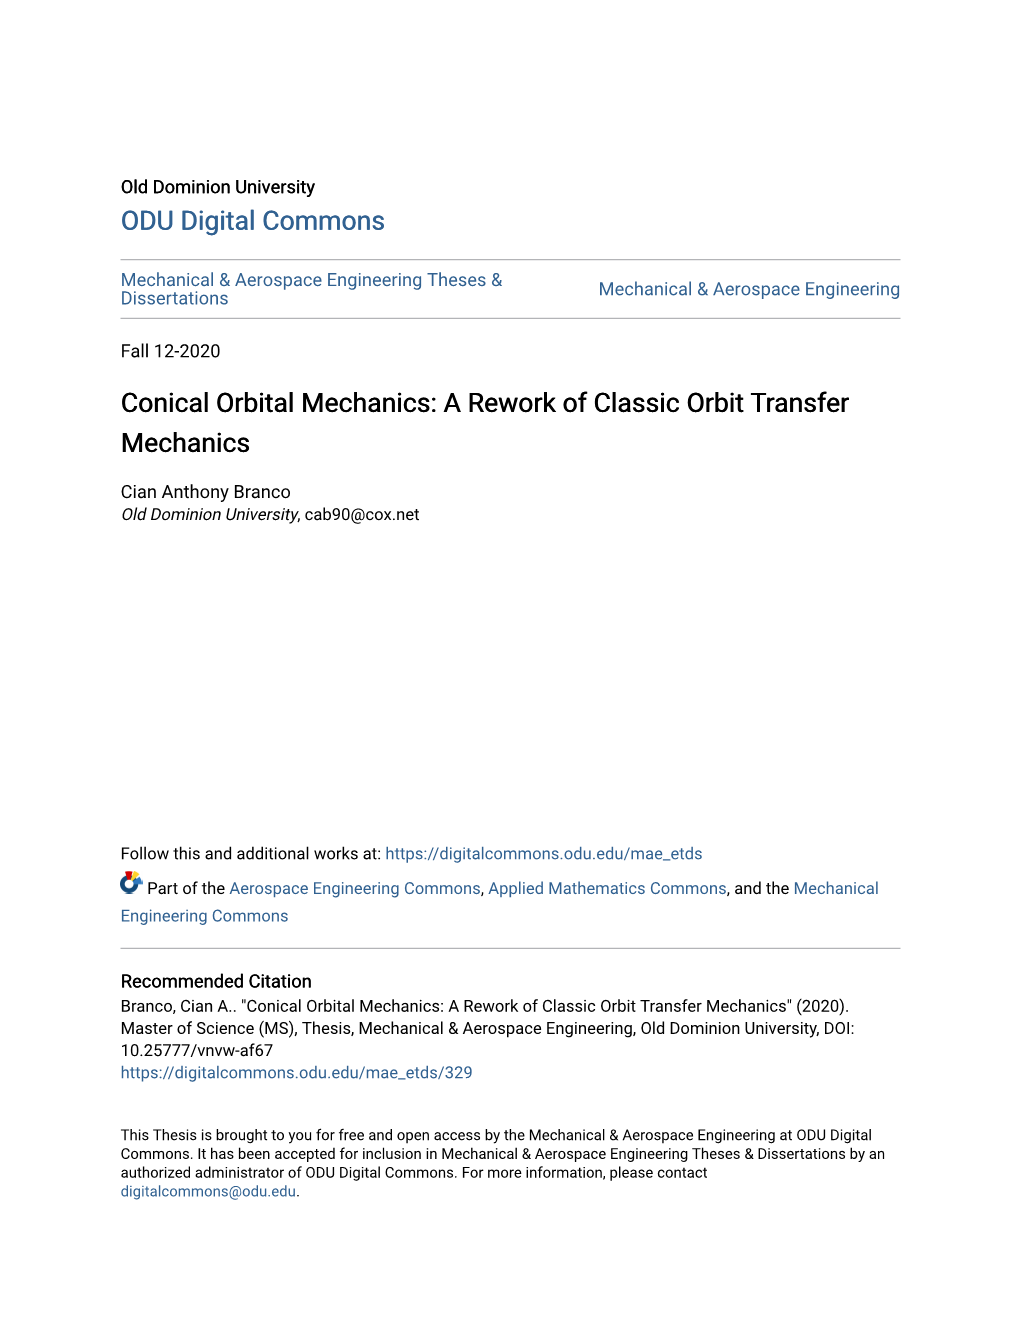 Conical Orbital Mechanics: a Rework of Classic Orbit Transfer Mechanics